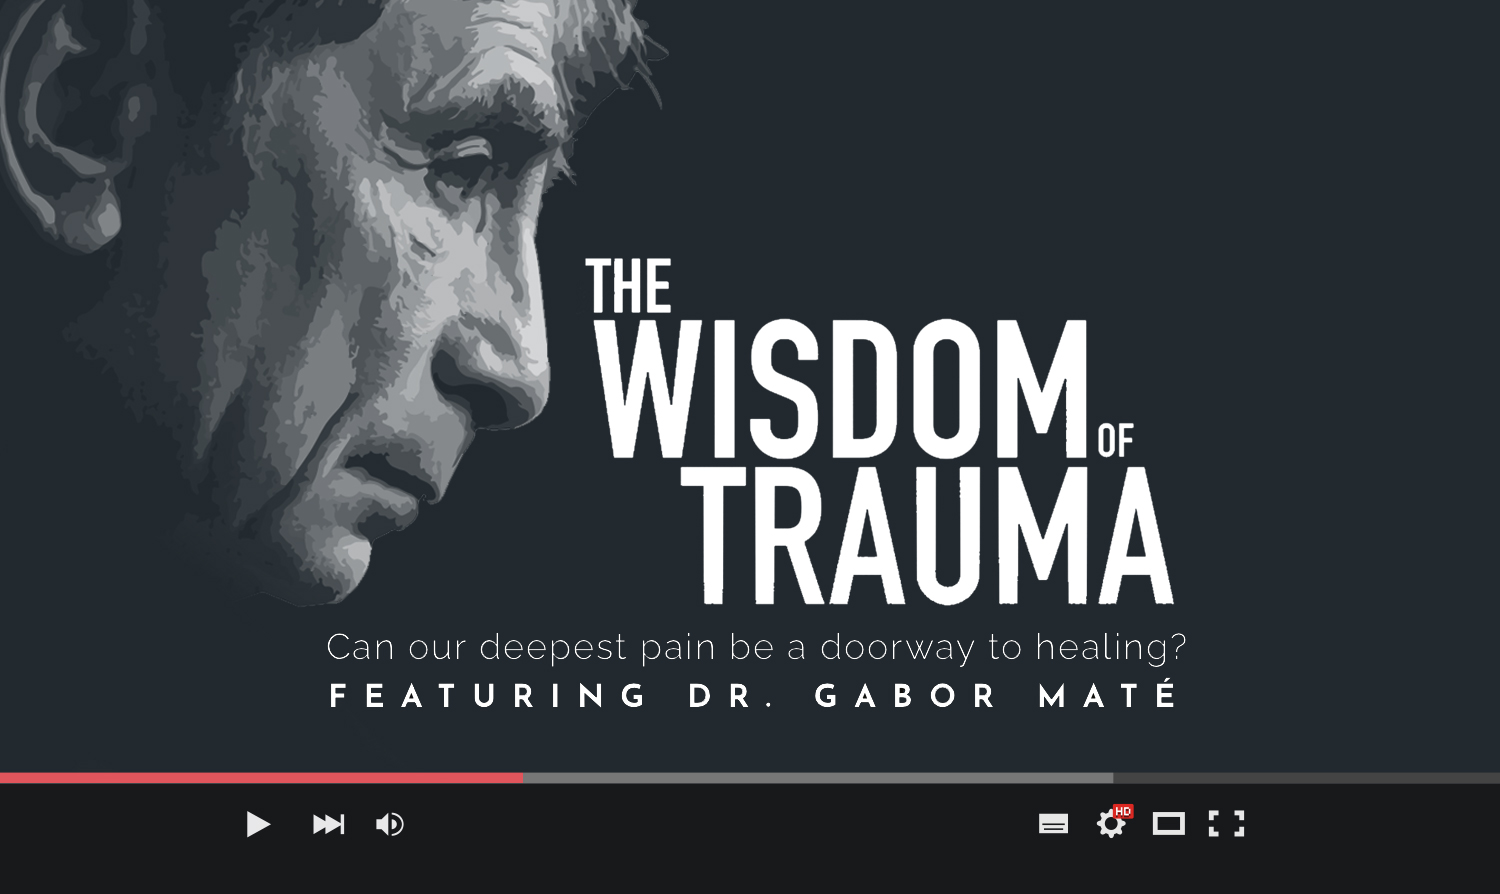 Ring tilbage Drik Blænding The Wisdom of Trauma - Featuring Dr Gabor Maté (Documentary & Trauma Talks)